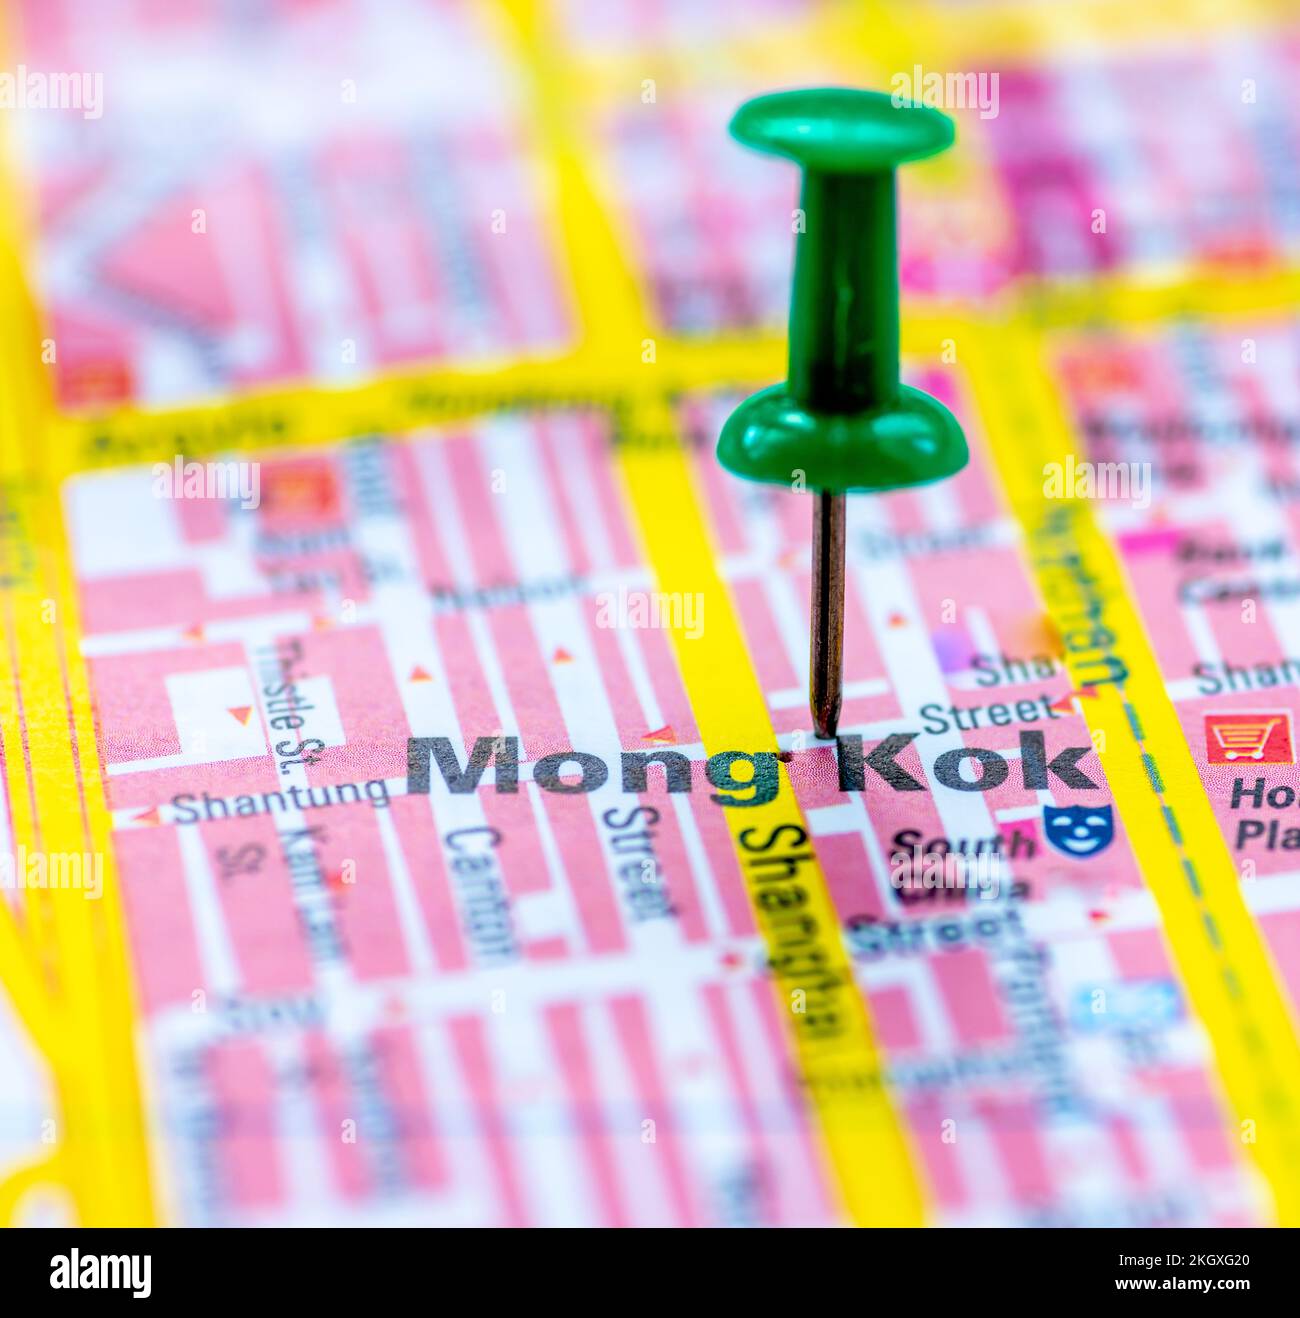 Die Kartenposition für Mong Kok, Kowloon, Hongkong, China, markiert mit einer grünen Stecknadel. Stockfoto